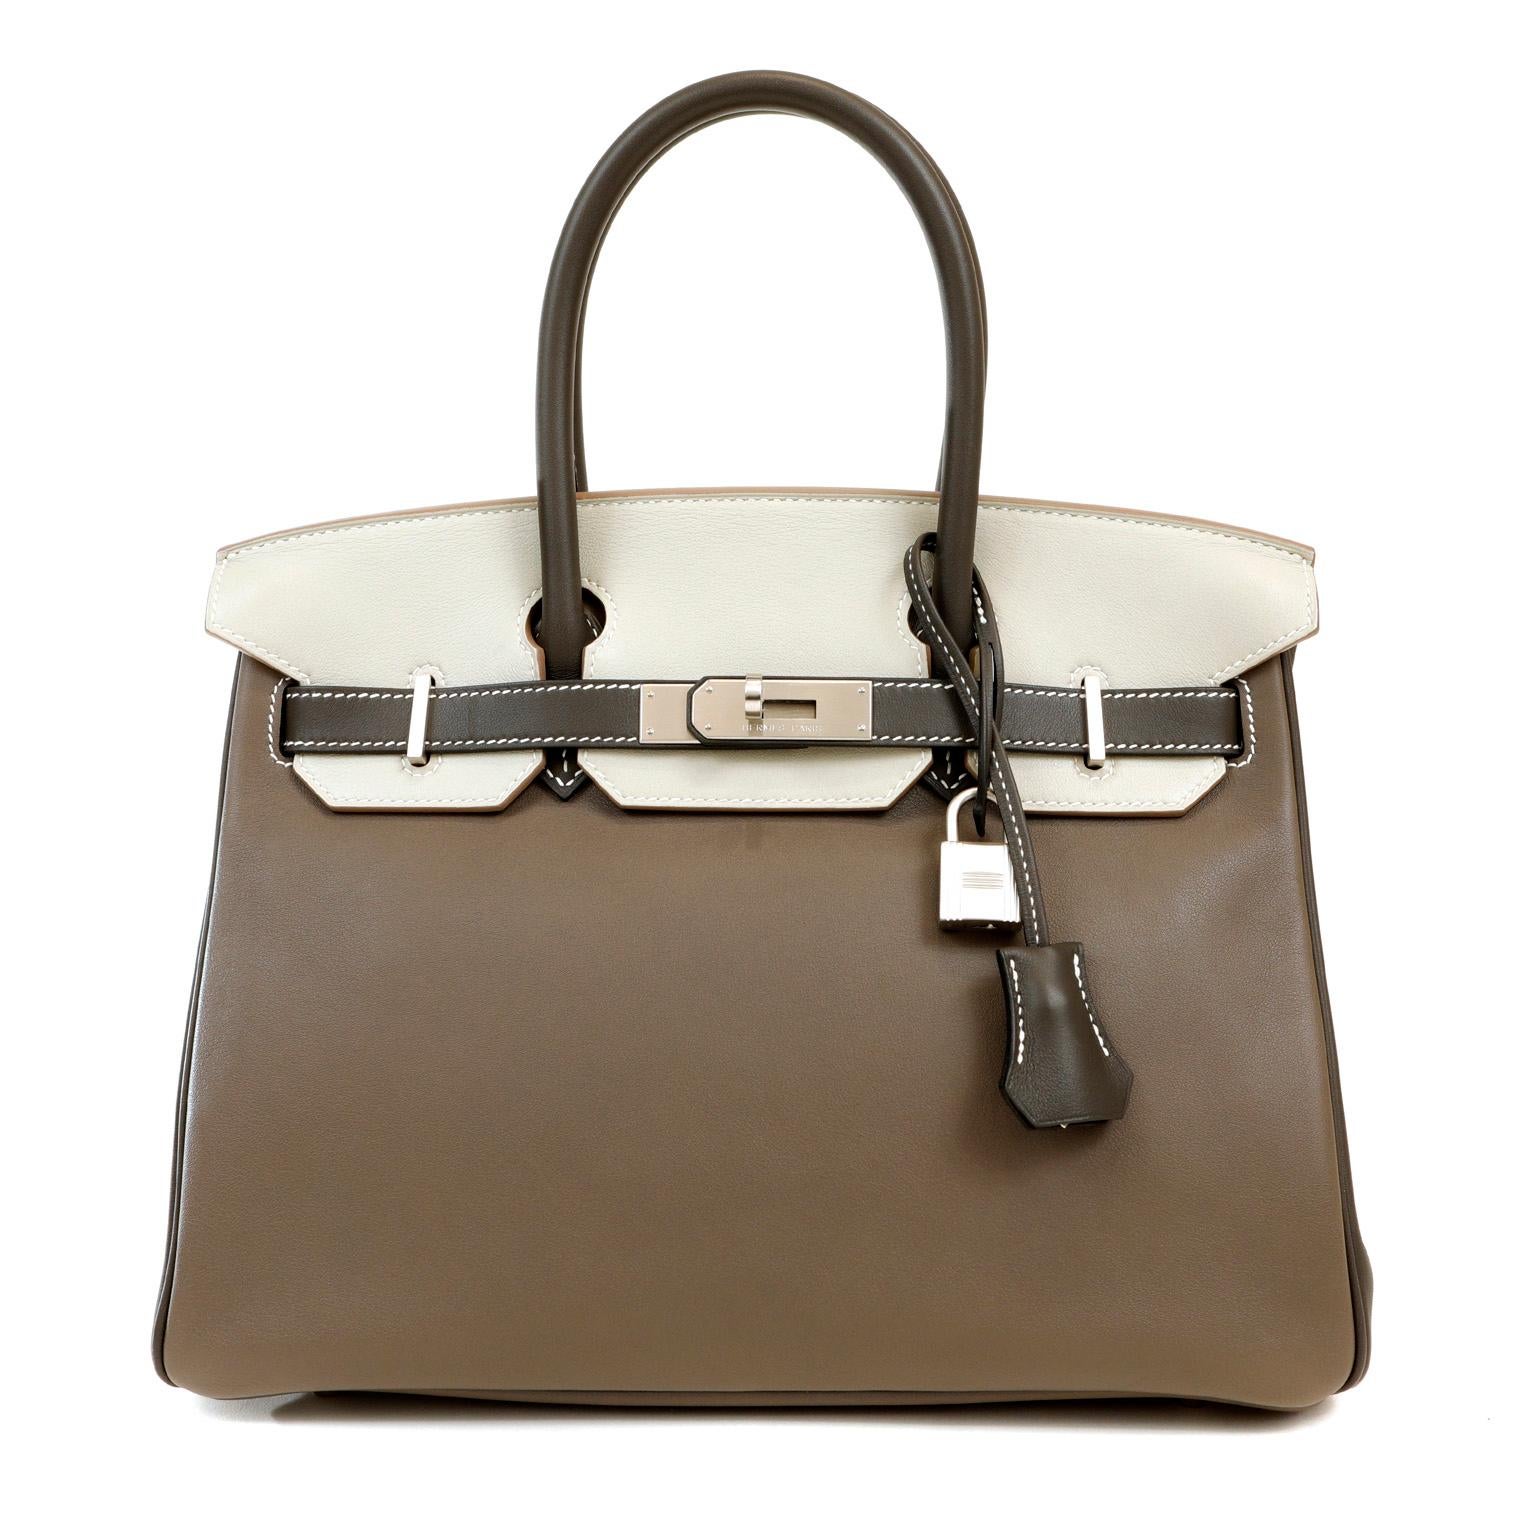 35cm Genuine Leather Shopper Tote Handbag Top Handle Satchel Etoupe